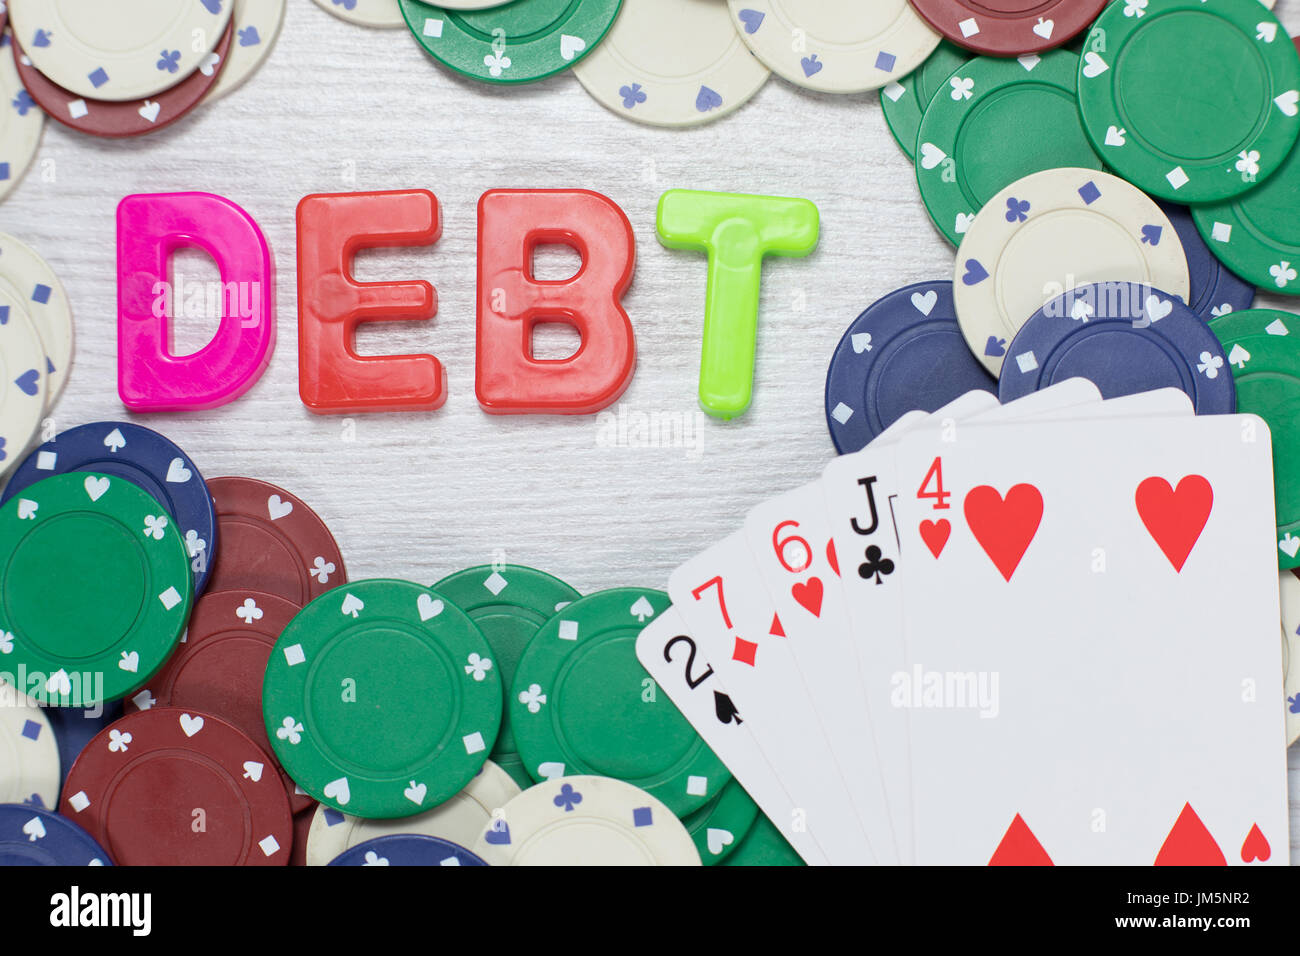 Gambling debts following a losing streak in a conceptual image ...